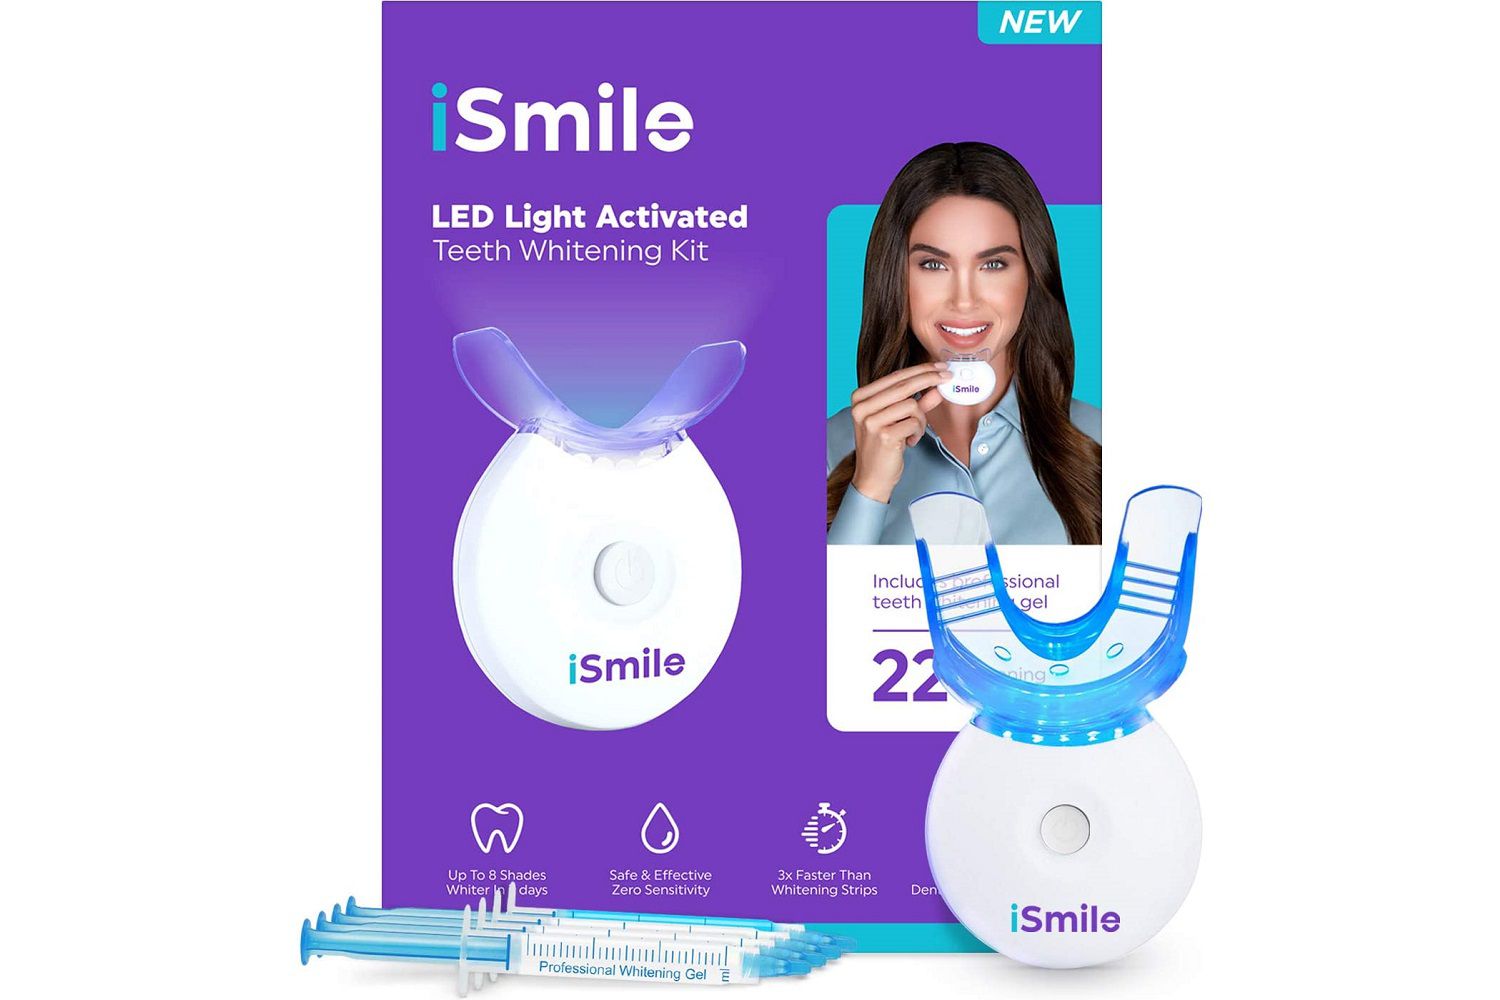 iSmile LED Light Activated Teeth Whitening Kit